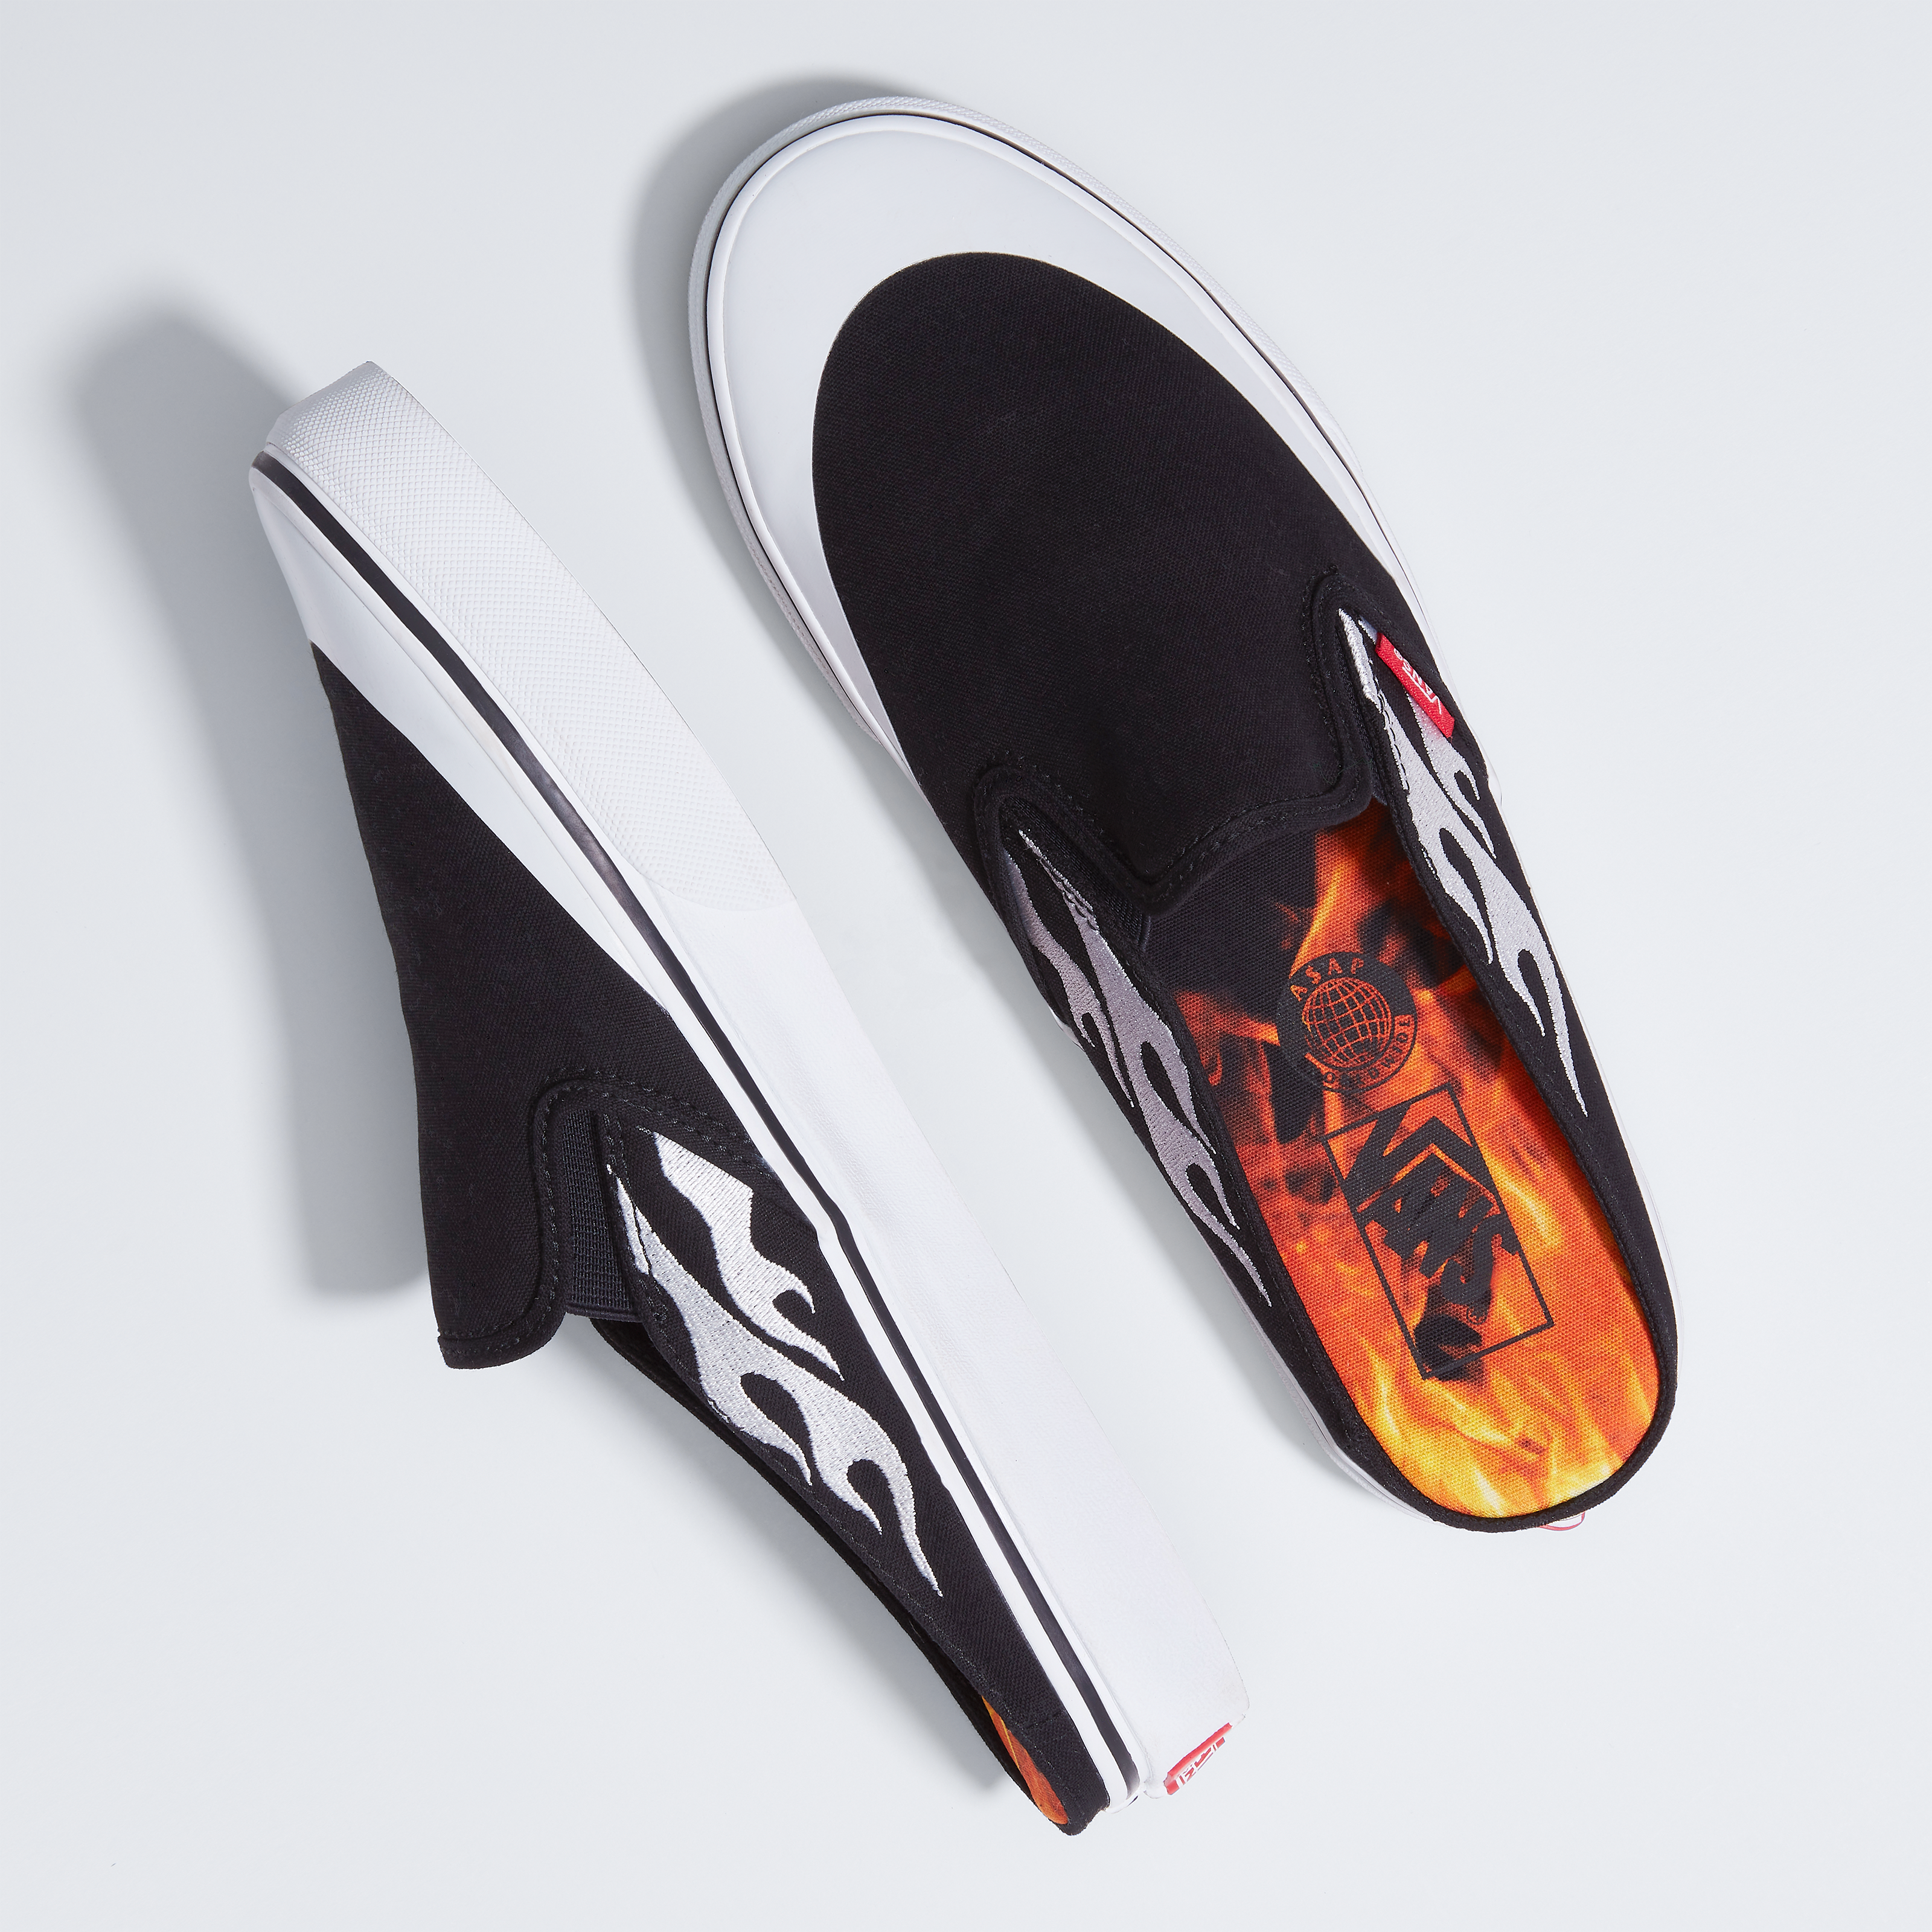 Vans x A$AP Worldwide Classic Slip-On Mule Shoes